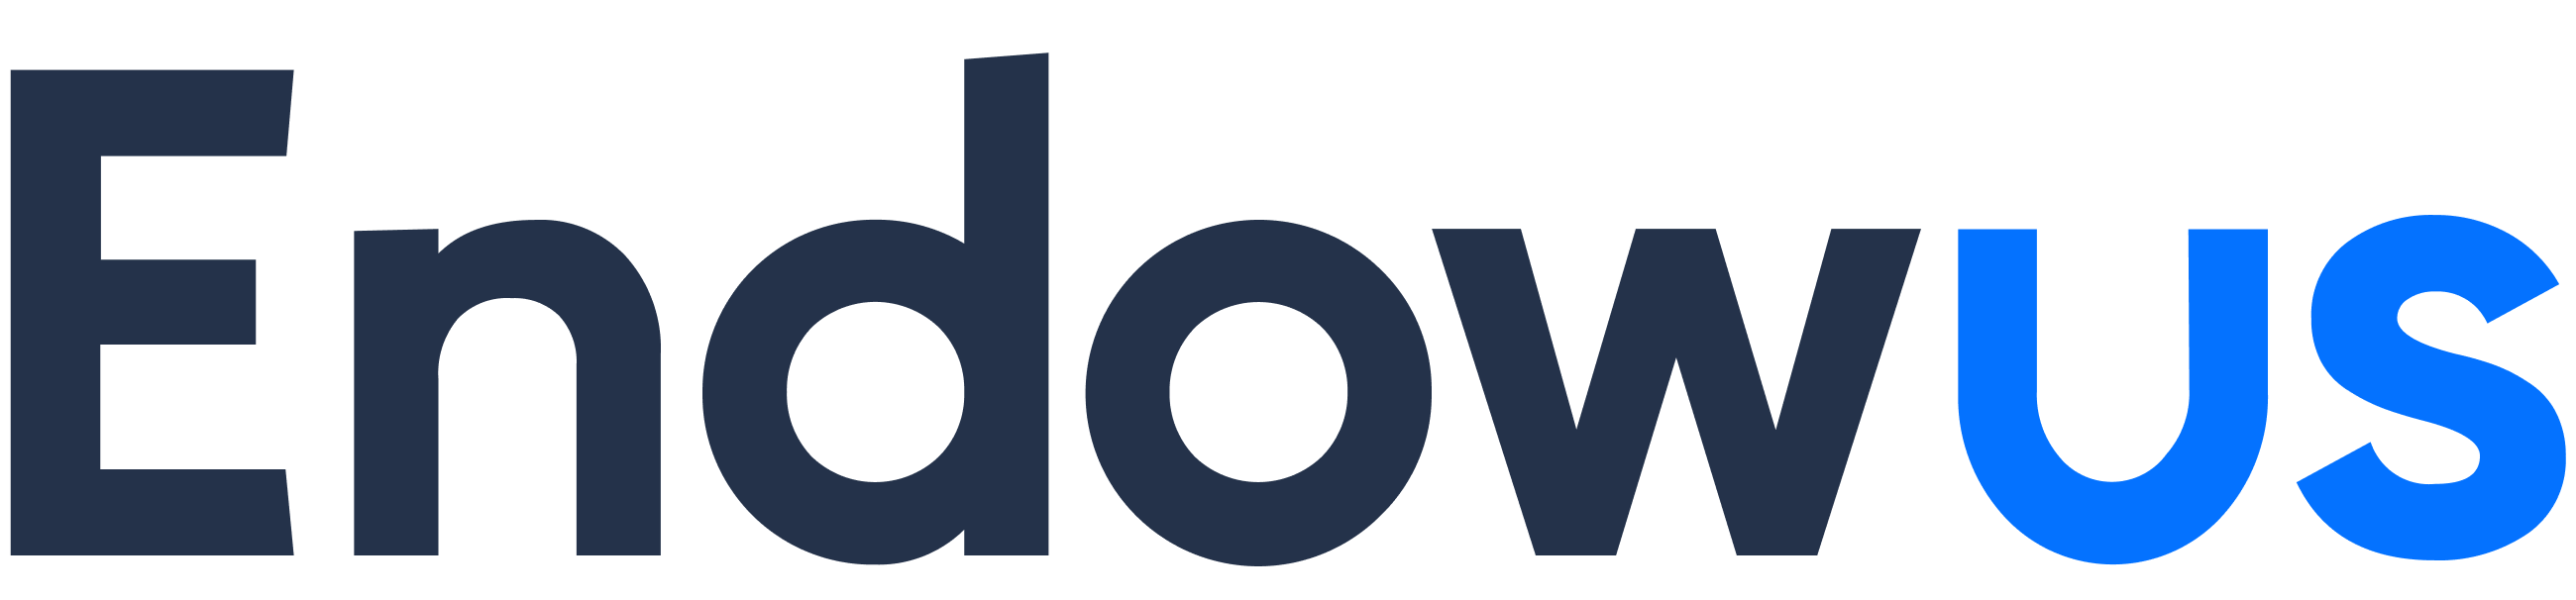 Endowus logotype (Navy and Blue)_RGB copy